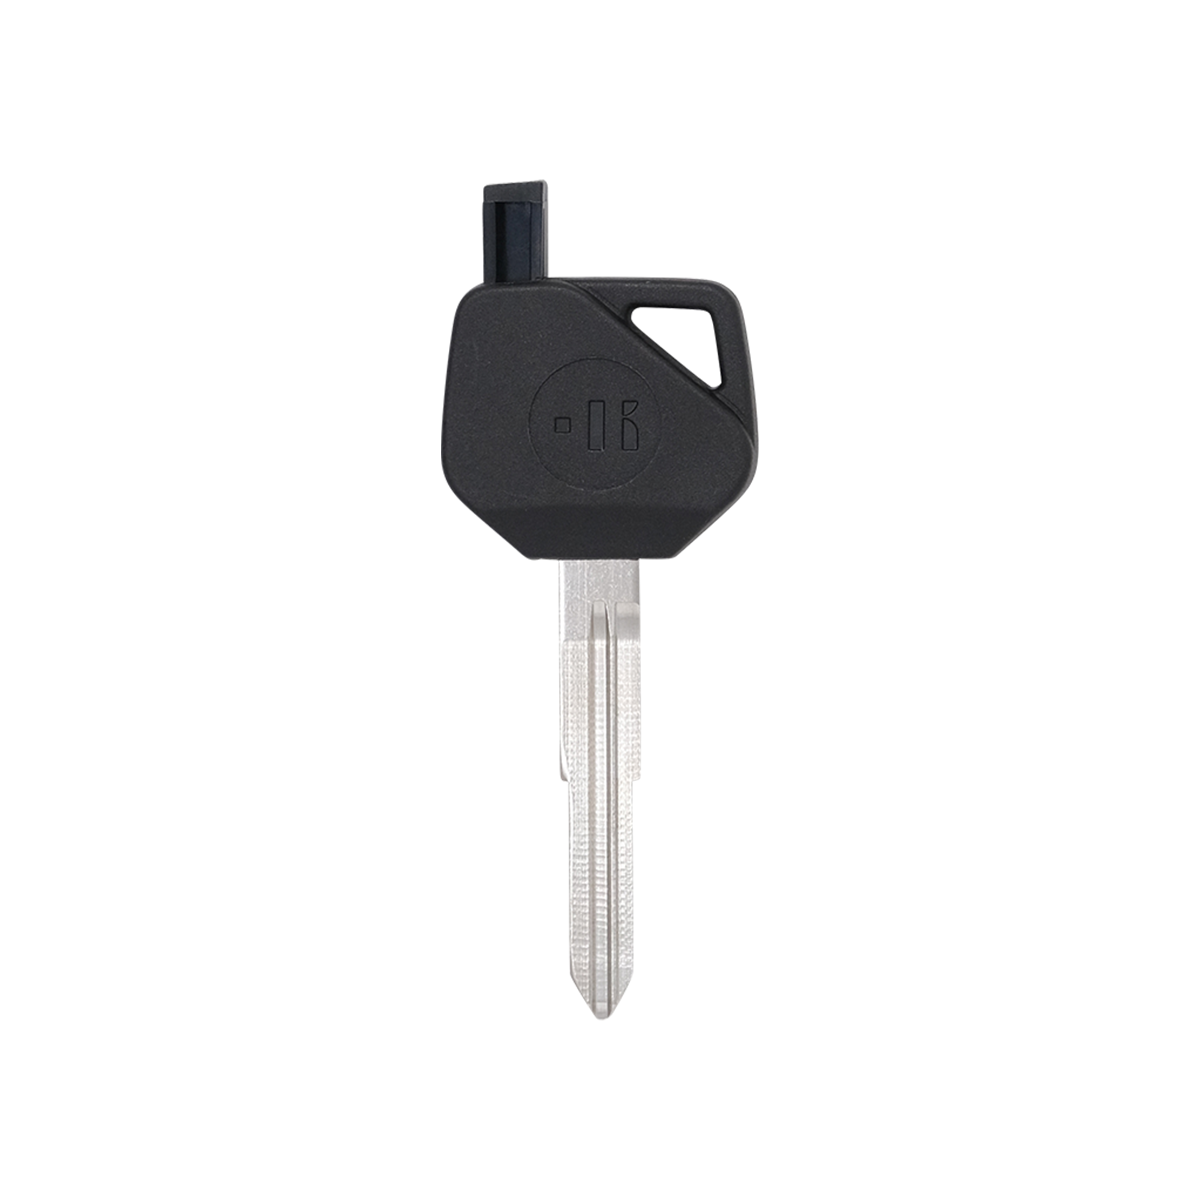 Honda Motorcycle Pod Key with pinhole release